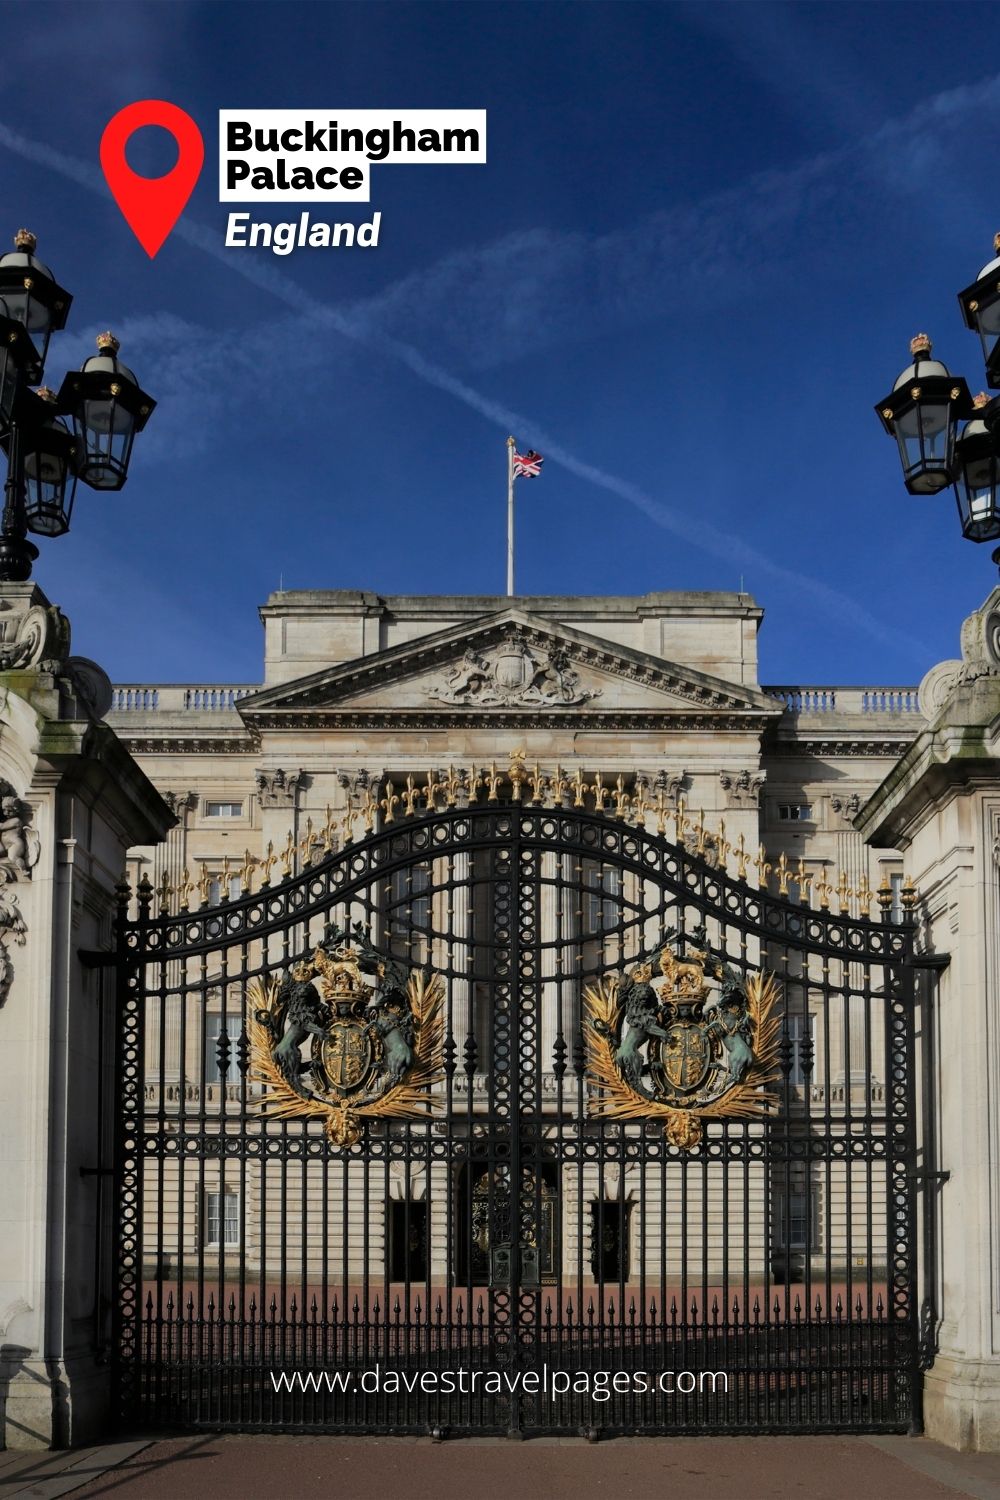 Buckingham Palace is a major Europe landmark